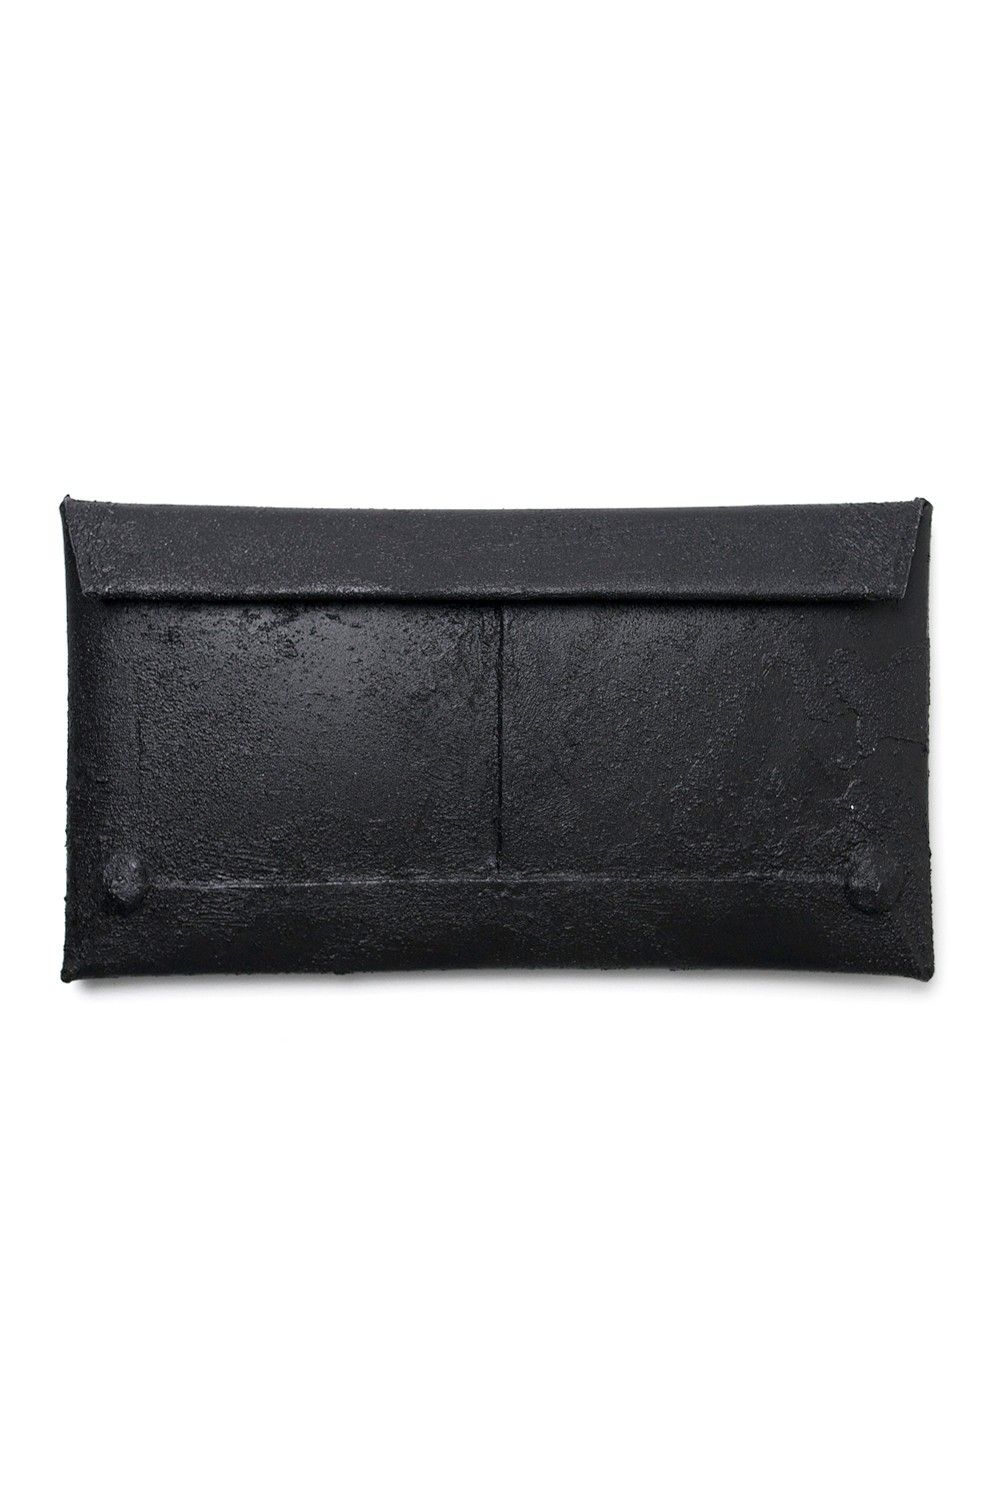 KAGARI YUSUKE - 封筒型長財布 [黒い壁] / mw02-bk | BONITA